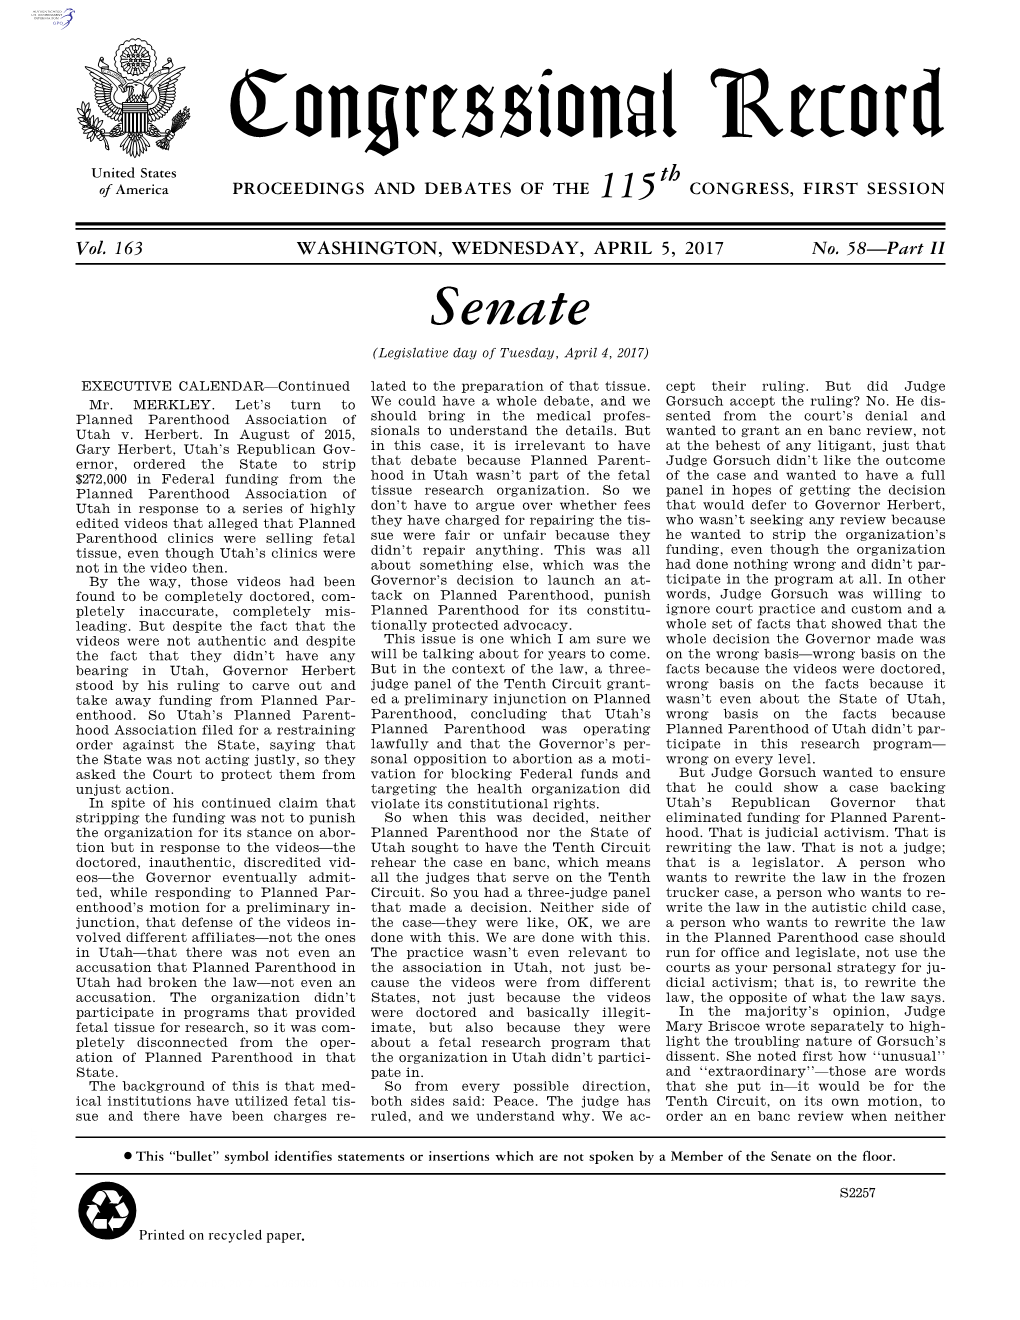 Senate (Legislative Day of Tuesday, April 4, 2017)